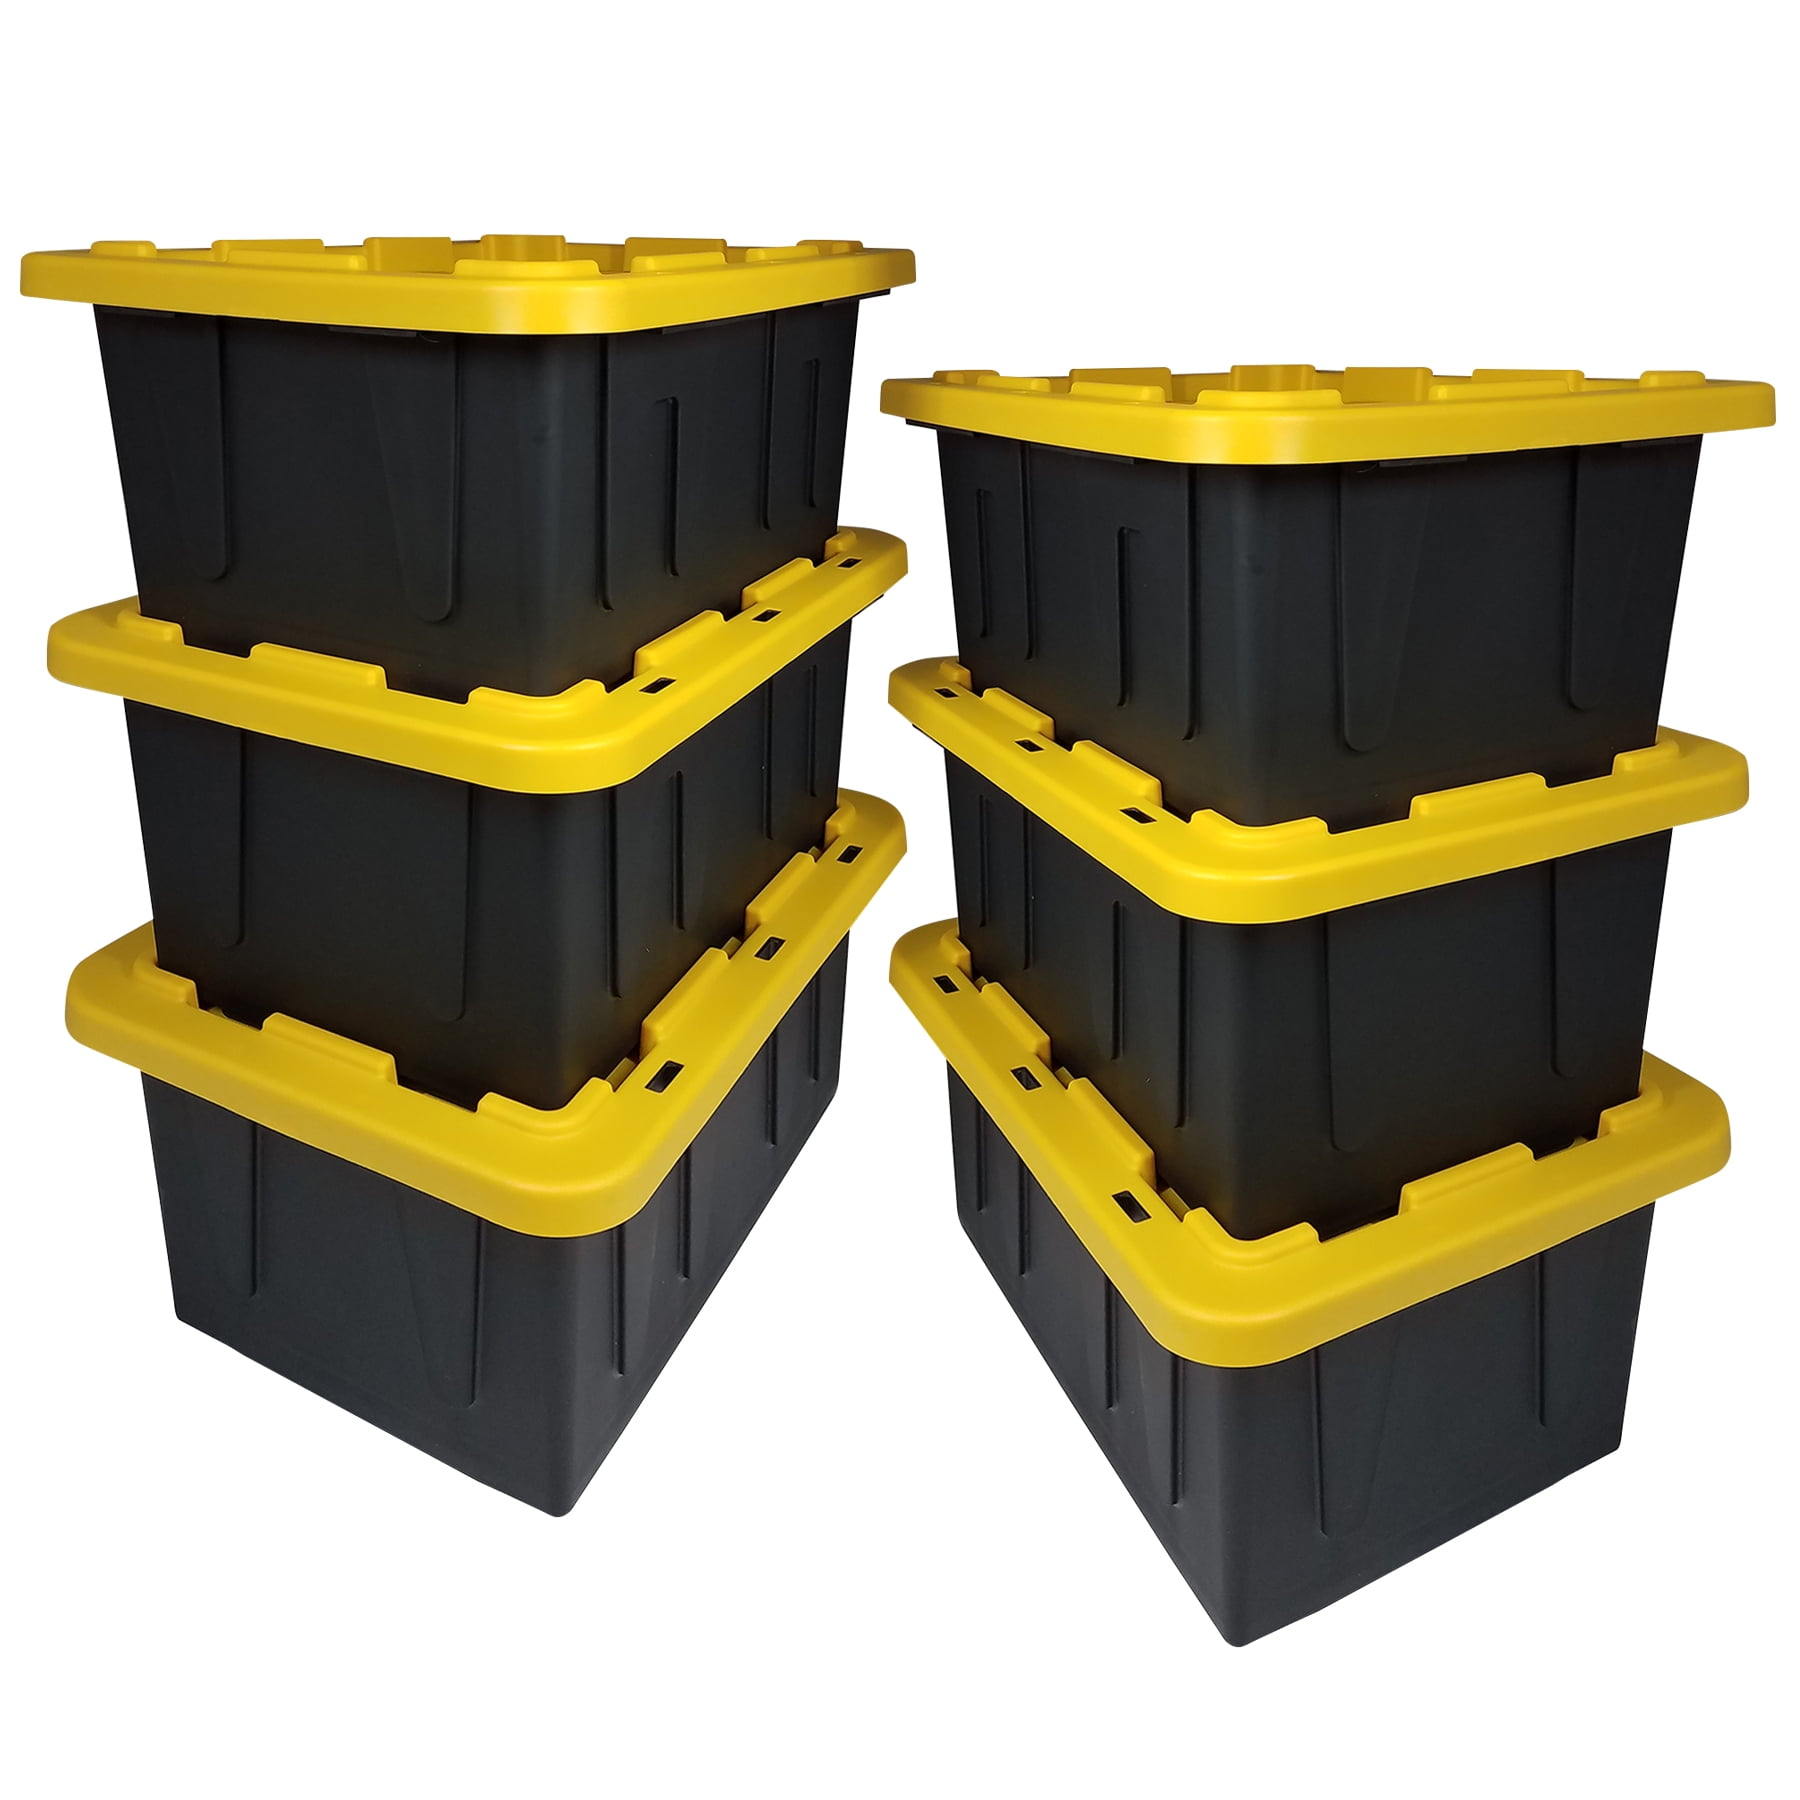 HOMZ Durabilt 34 Gallon Plastic Organizer Storage Bin Tote with